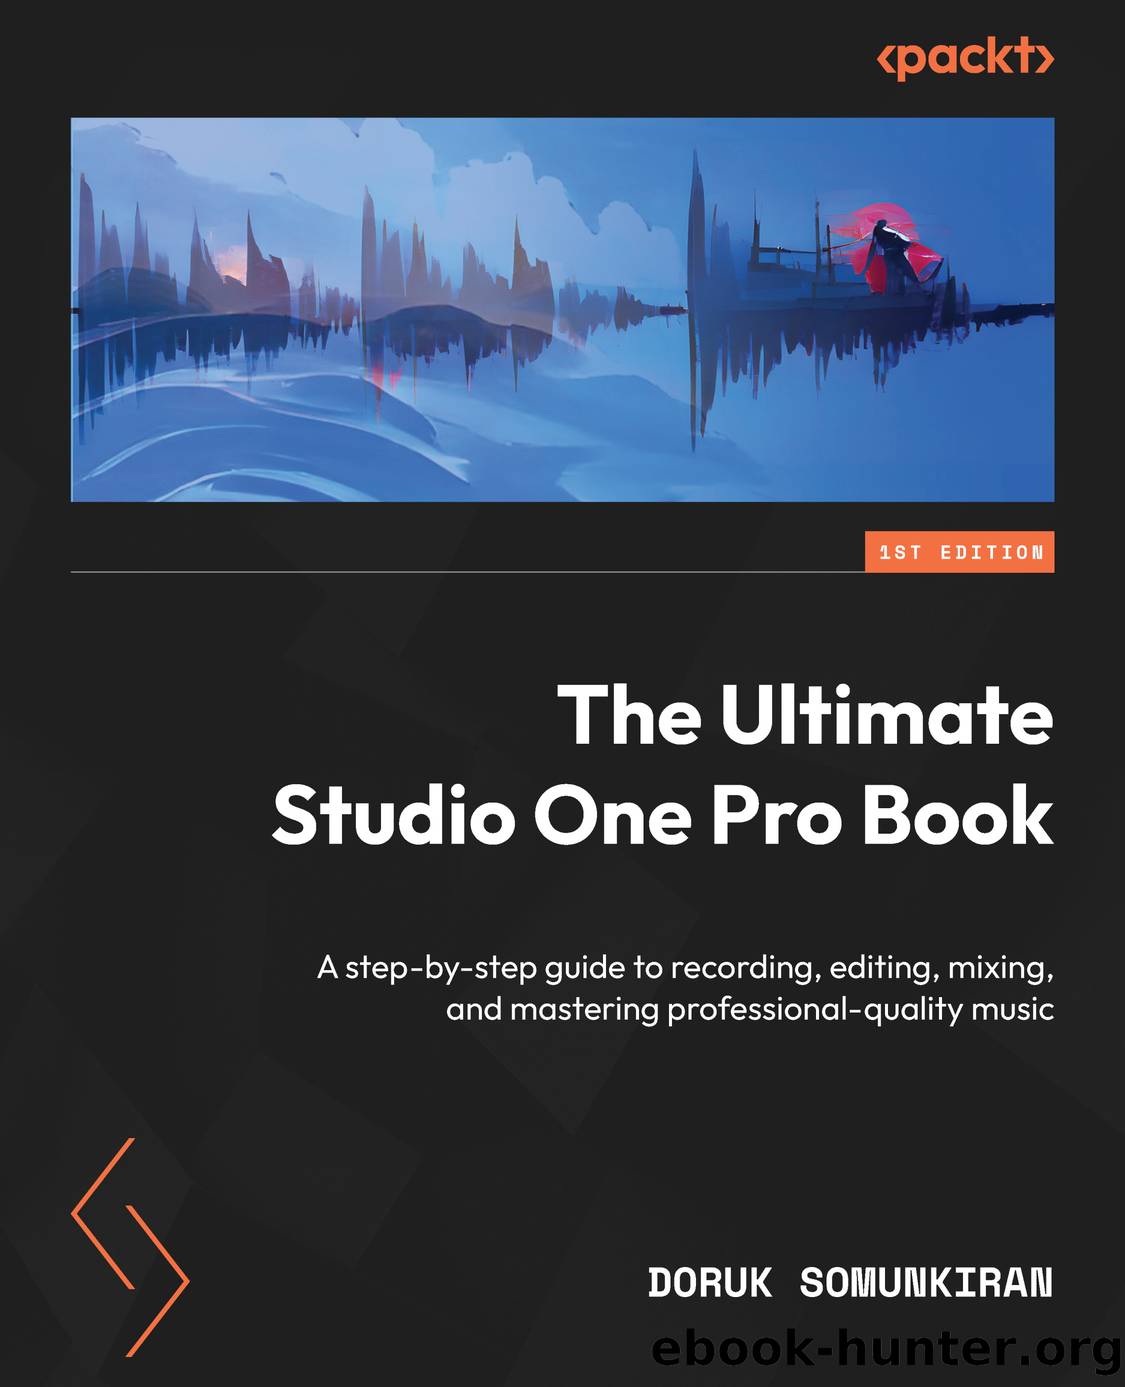 The Ultimate Studio One Pro Book by Doruk Somunkiran